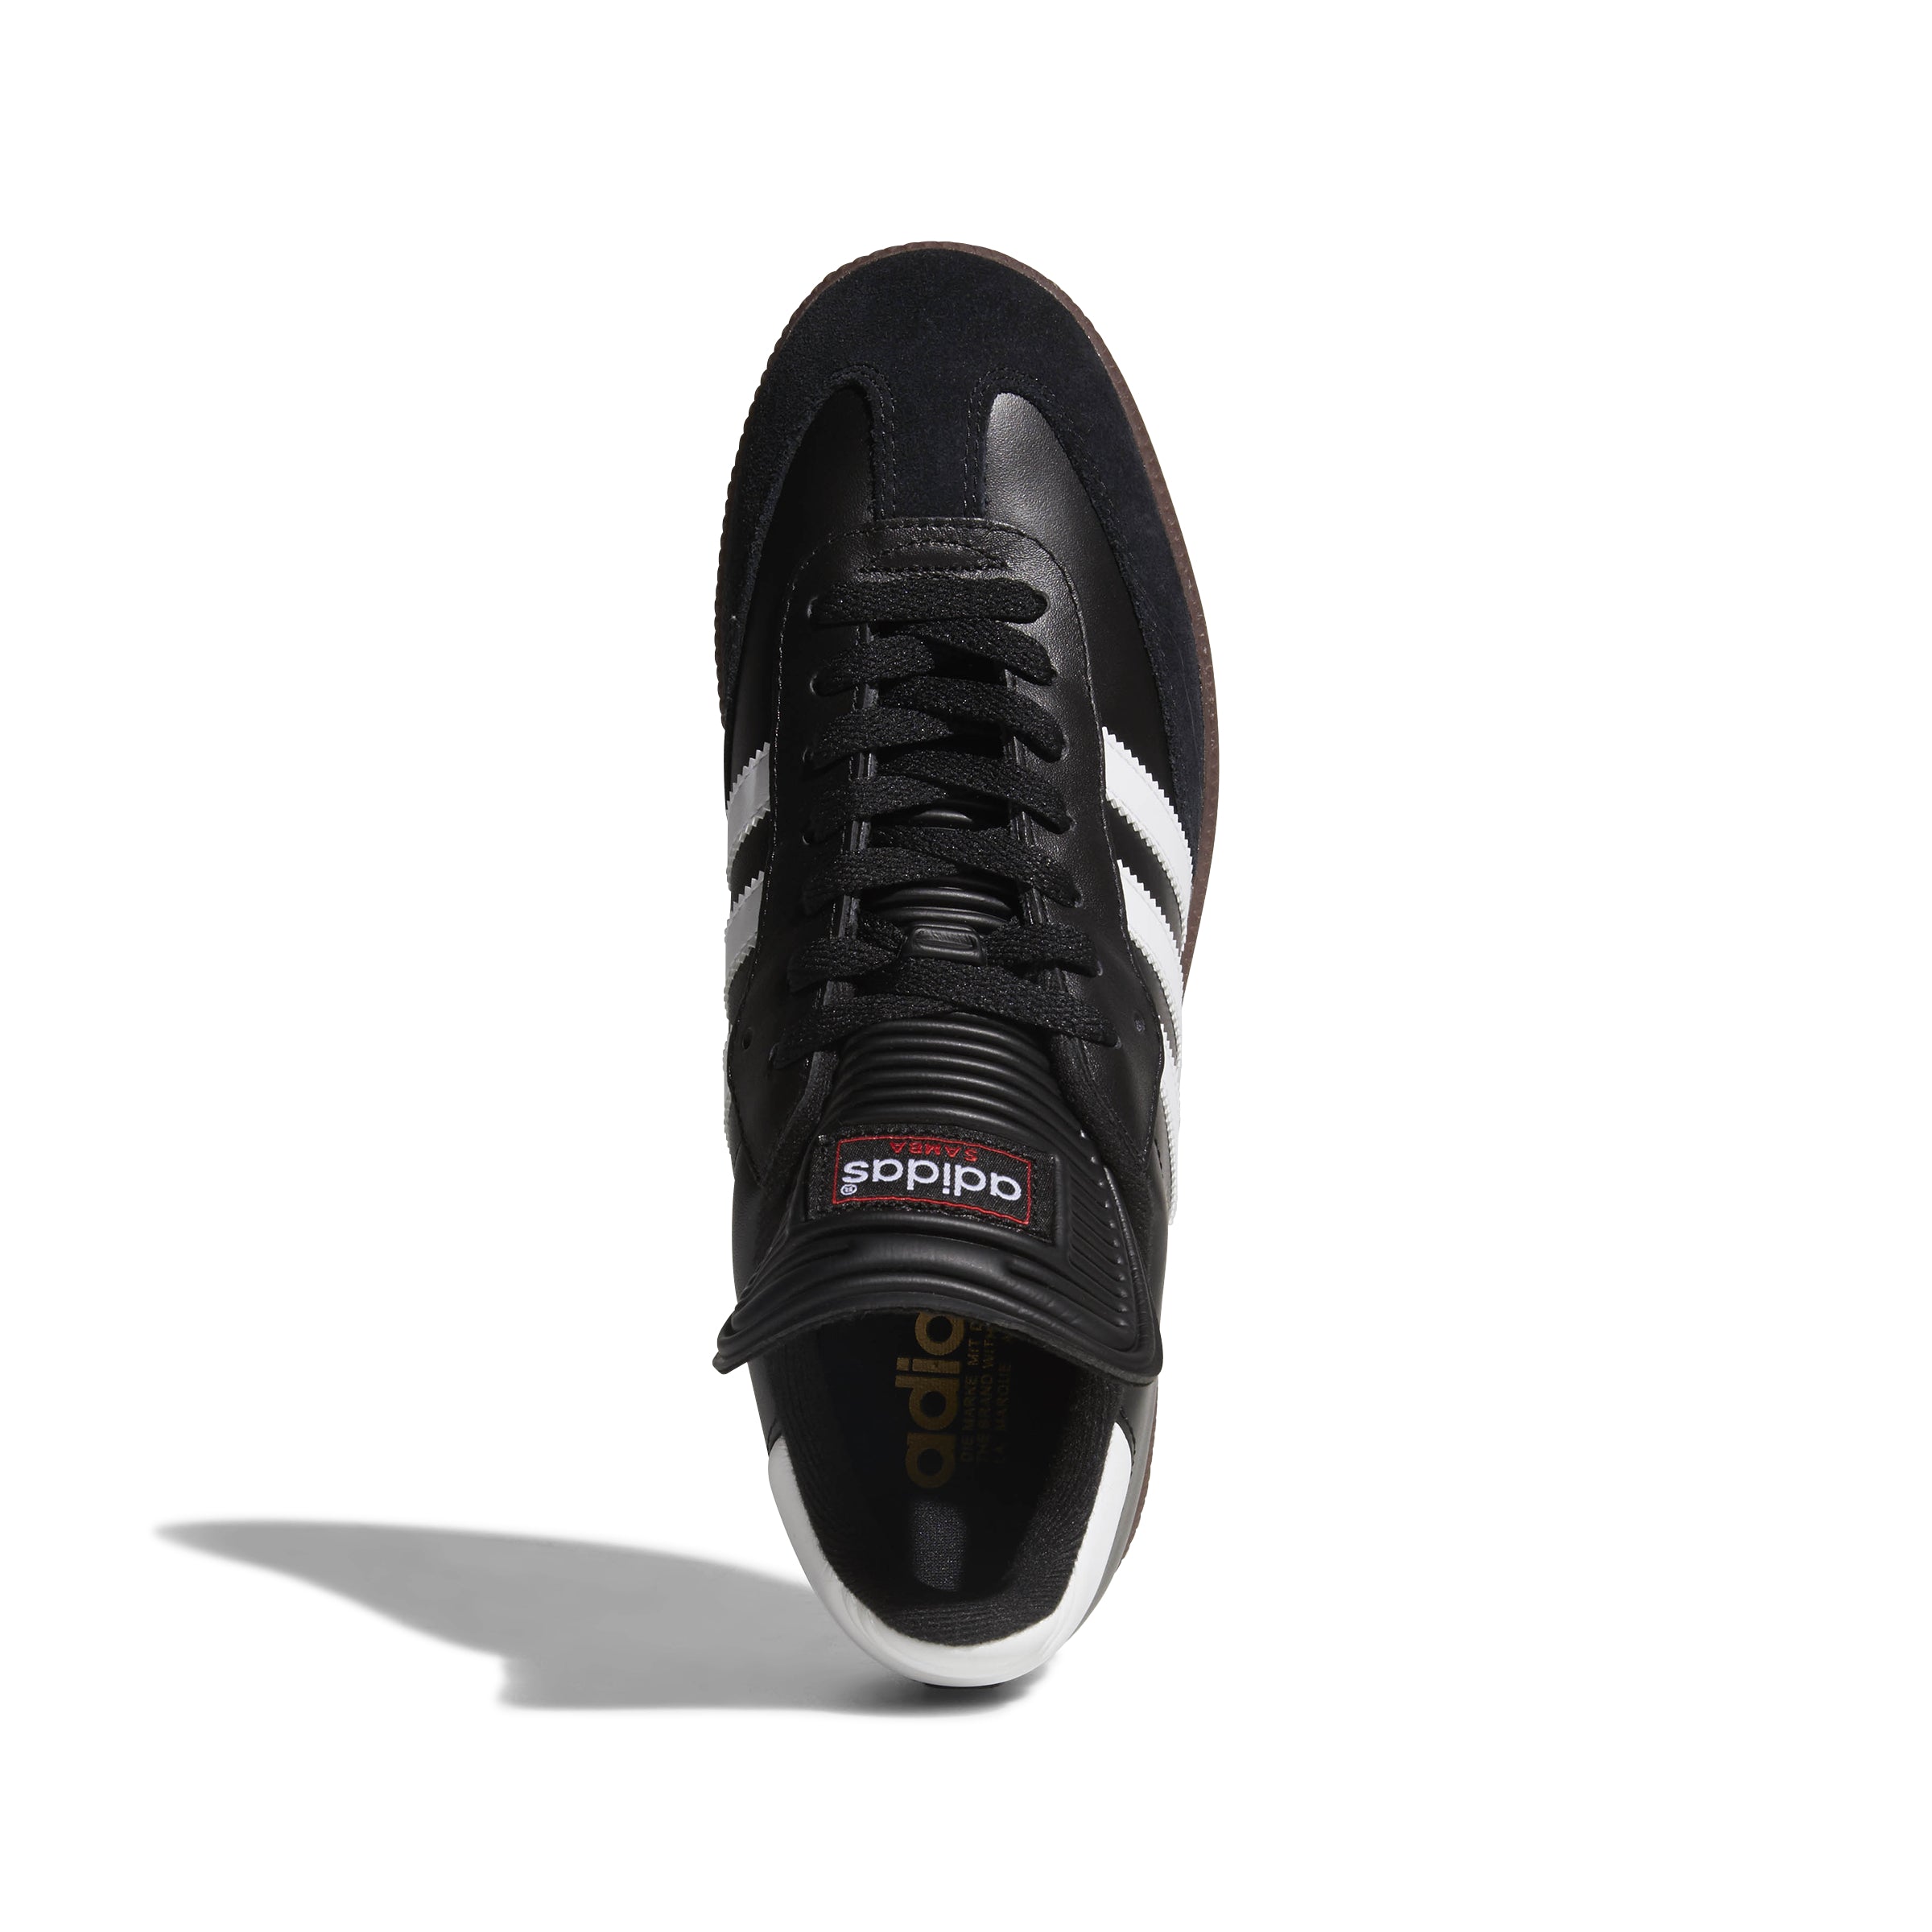 adidas Mens Samba Classic Indoor Soccer Training Shoes